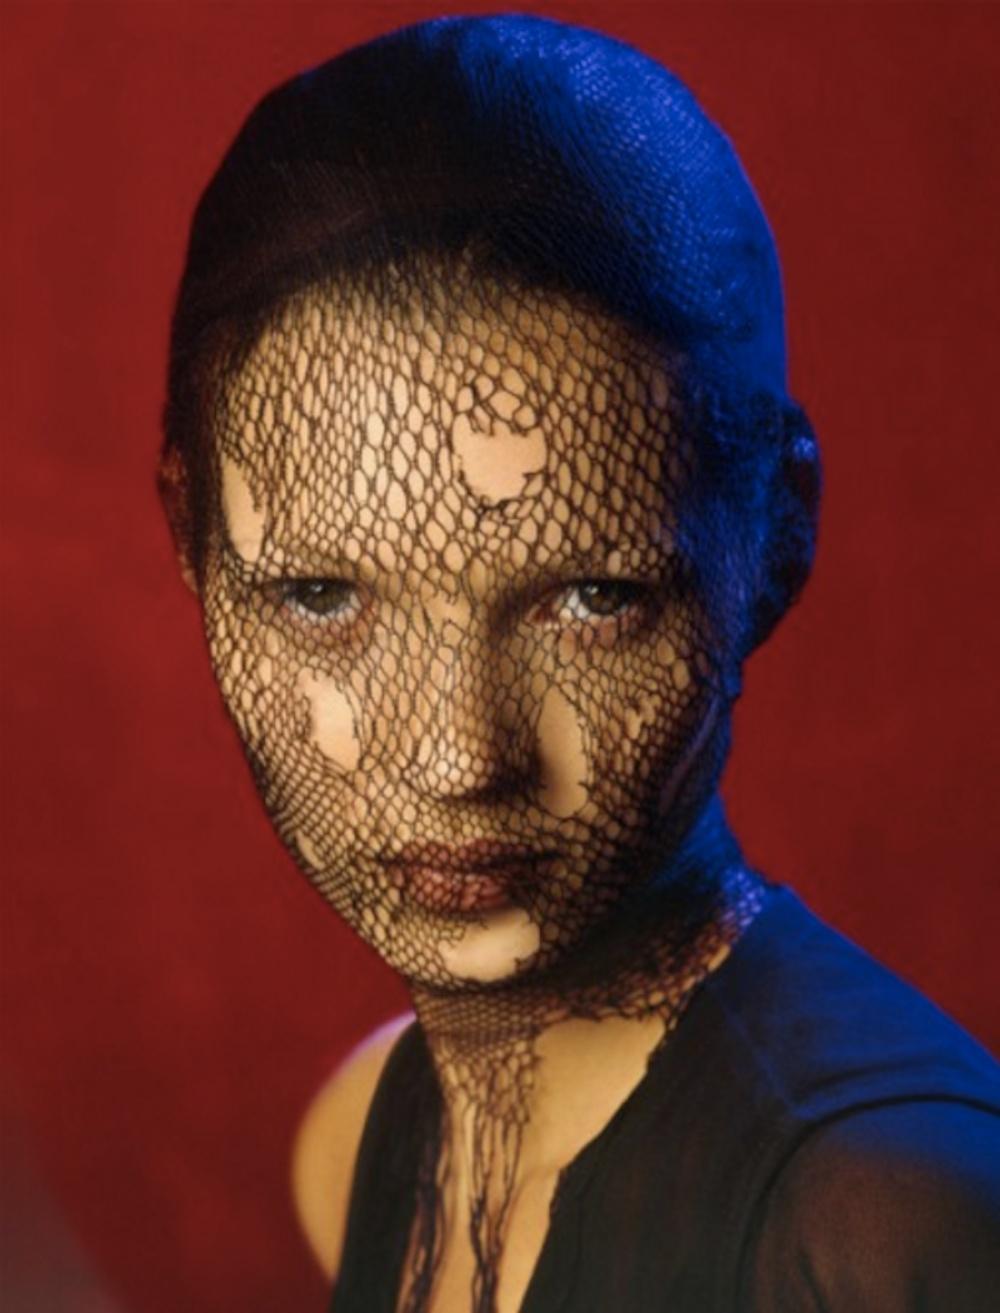 Kate Moss Schleier (Farbe) - Albert Watson, Frau, Porträt, Erotik, Celebrity, Kunst